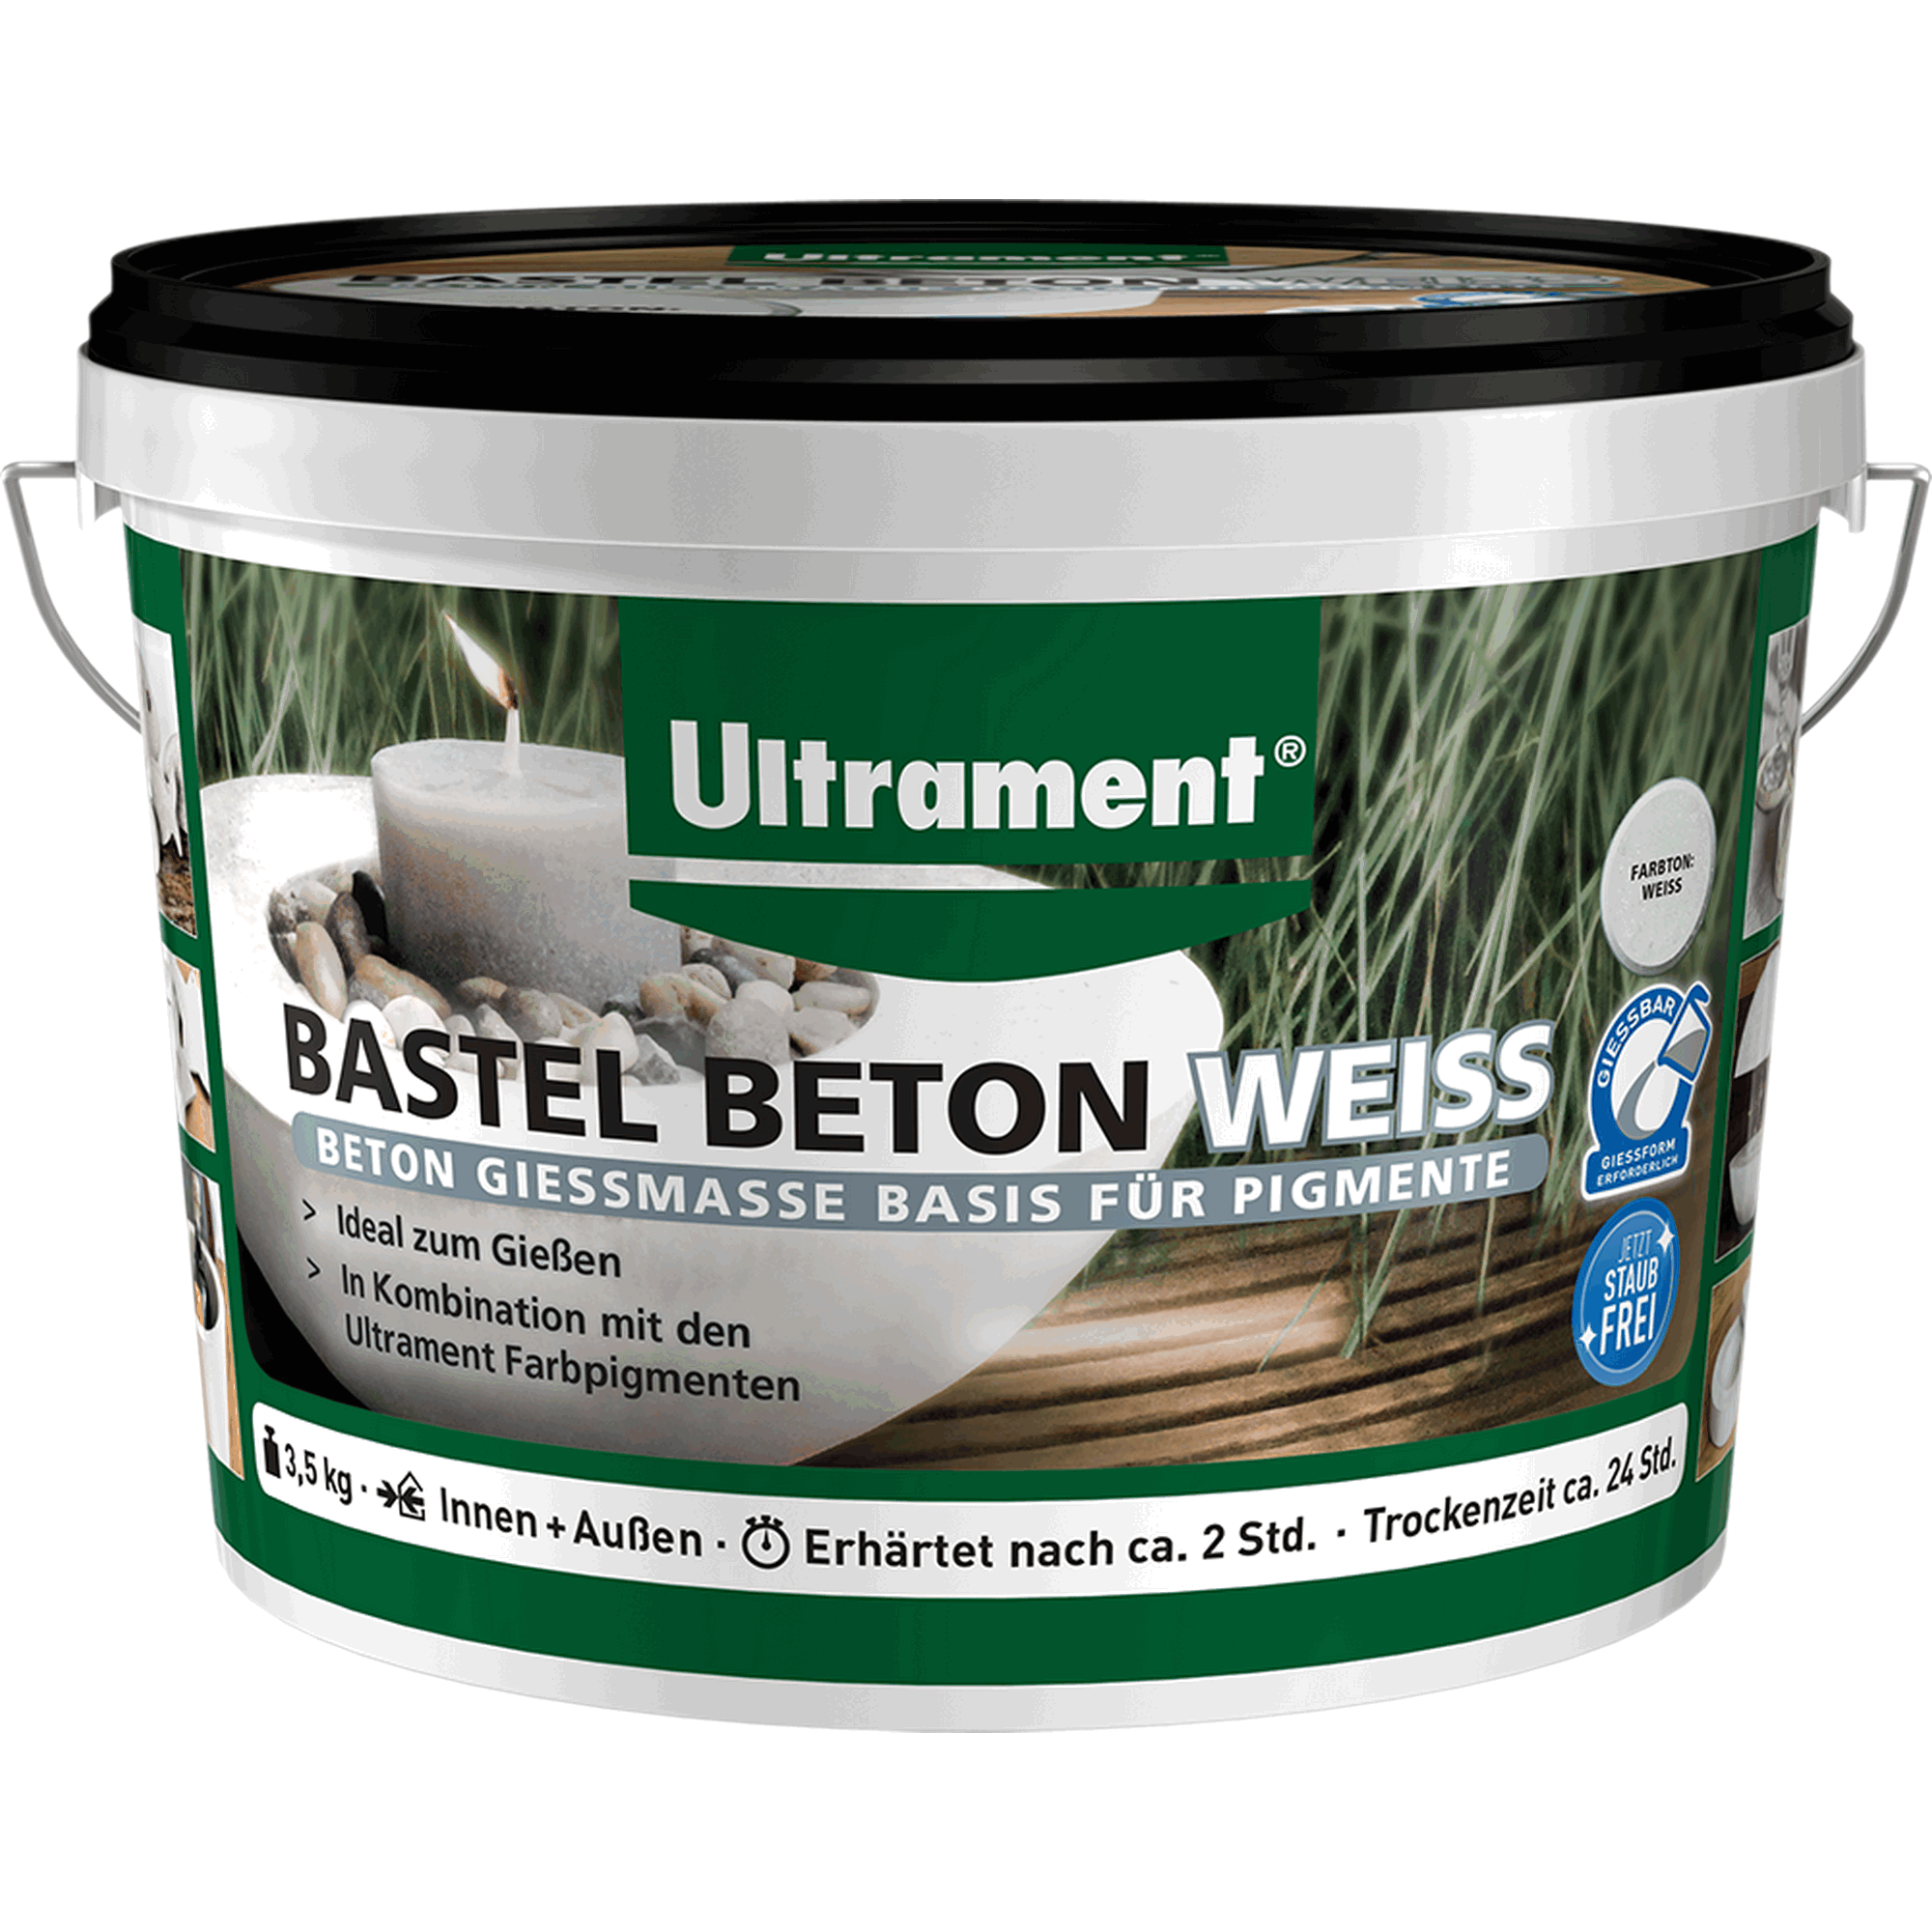 Bastel-Beton weiß 3,5 kg + product picture